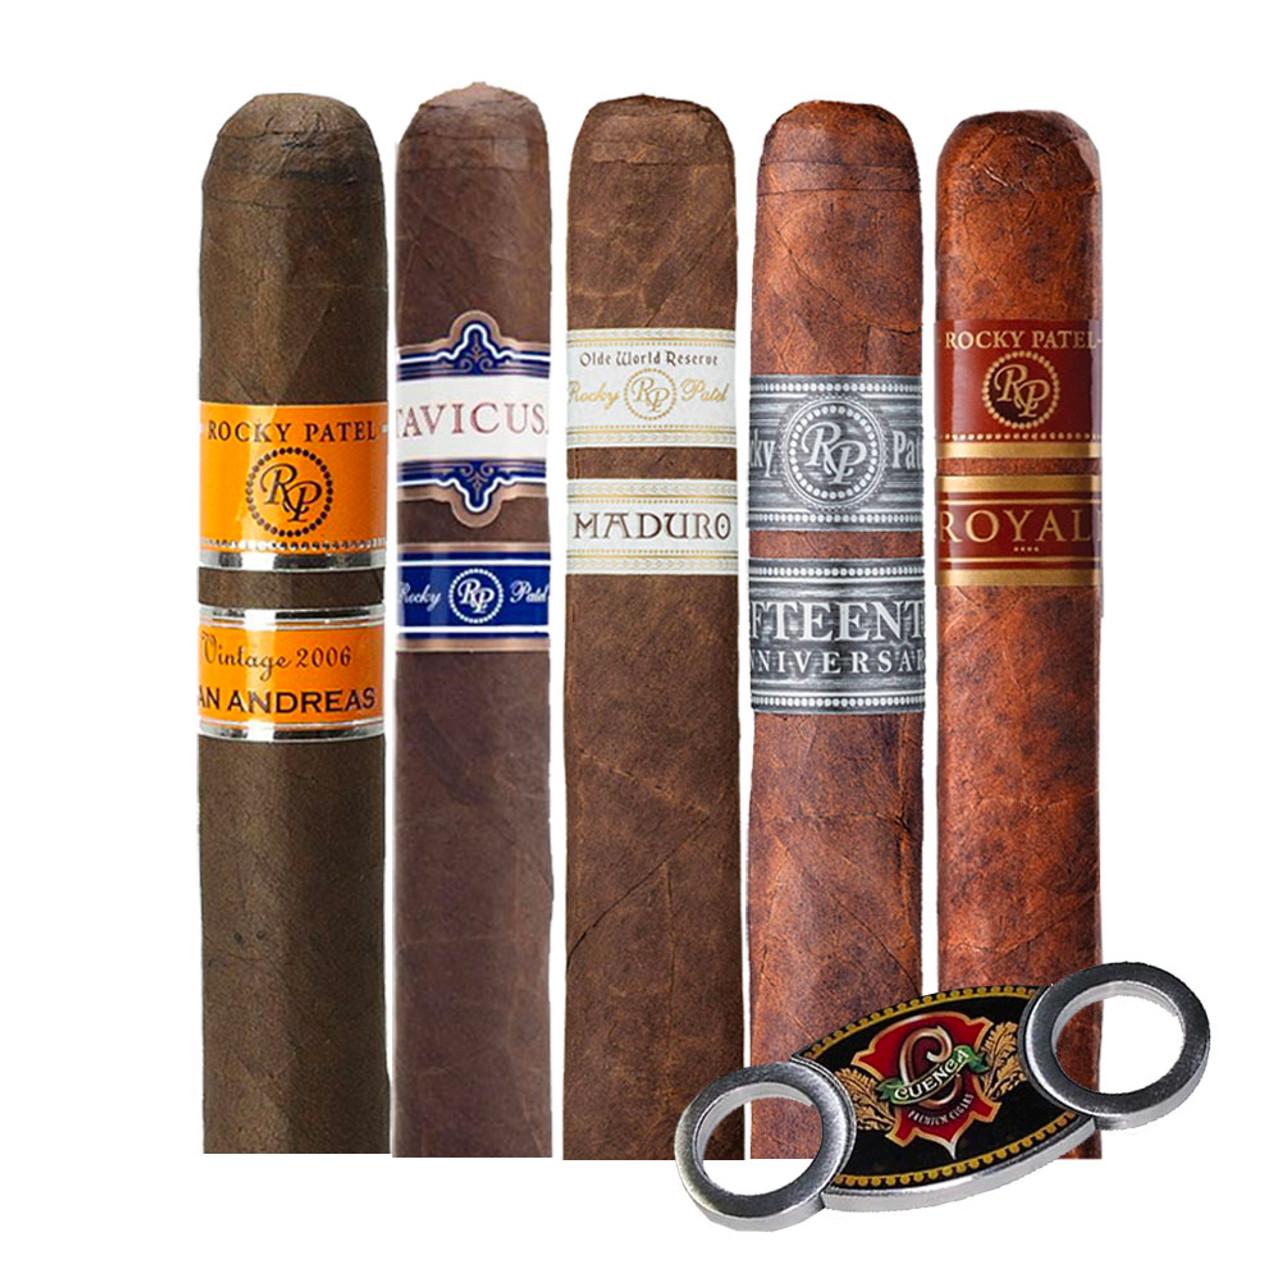 The Diamond Series Cutter - Rocky Patel Premium Cigars